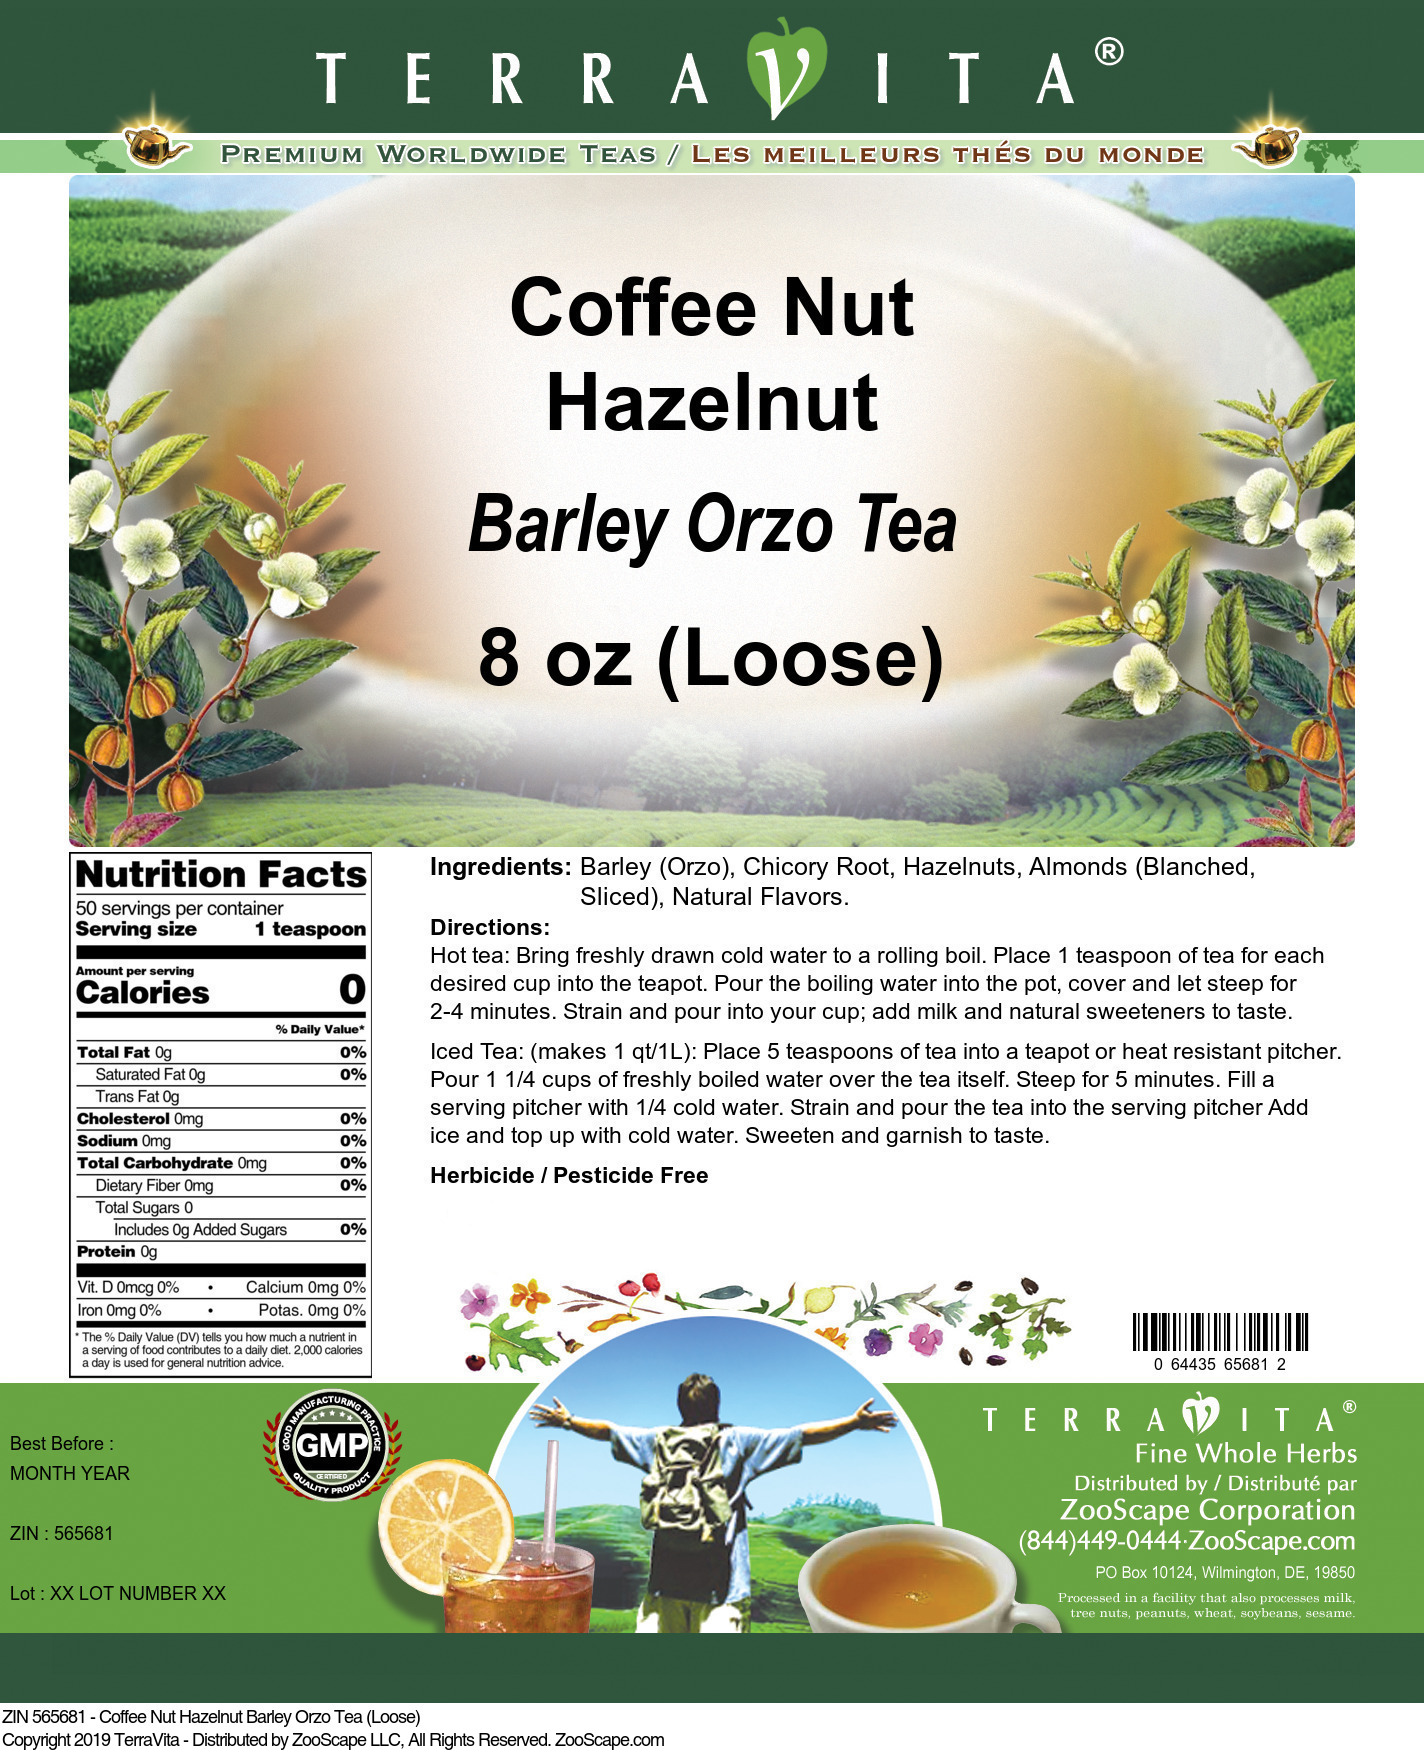 Coffee Nut Hazelnut Barley Orzo Tea (Loose) - Label